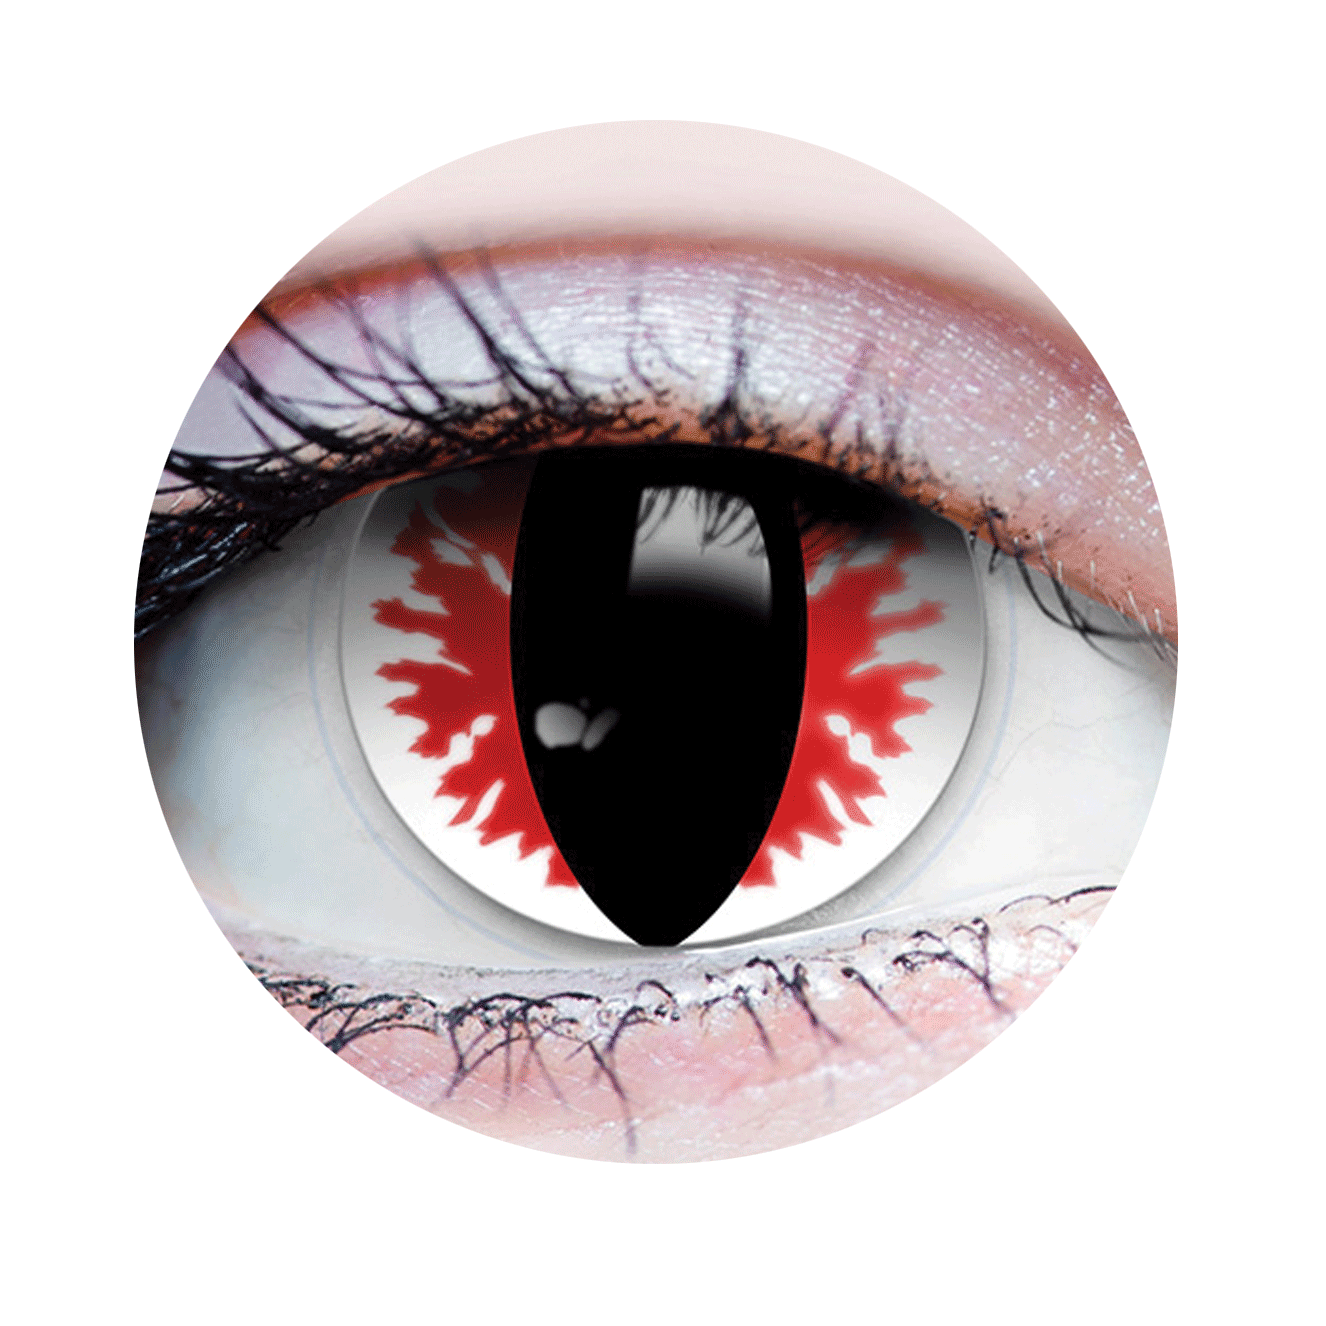 Devil Eye Contact Lenses